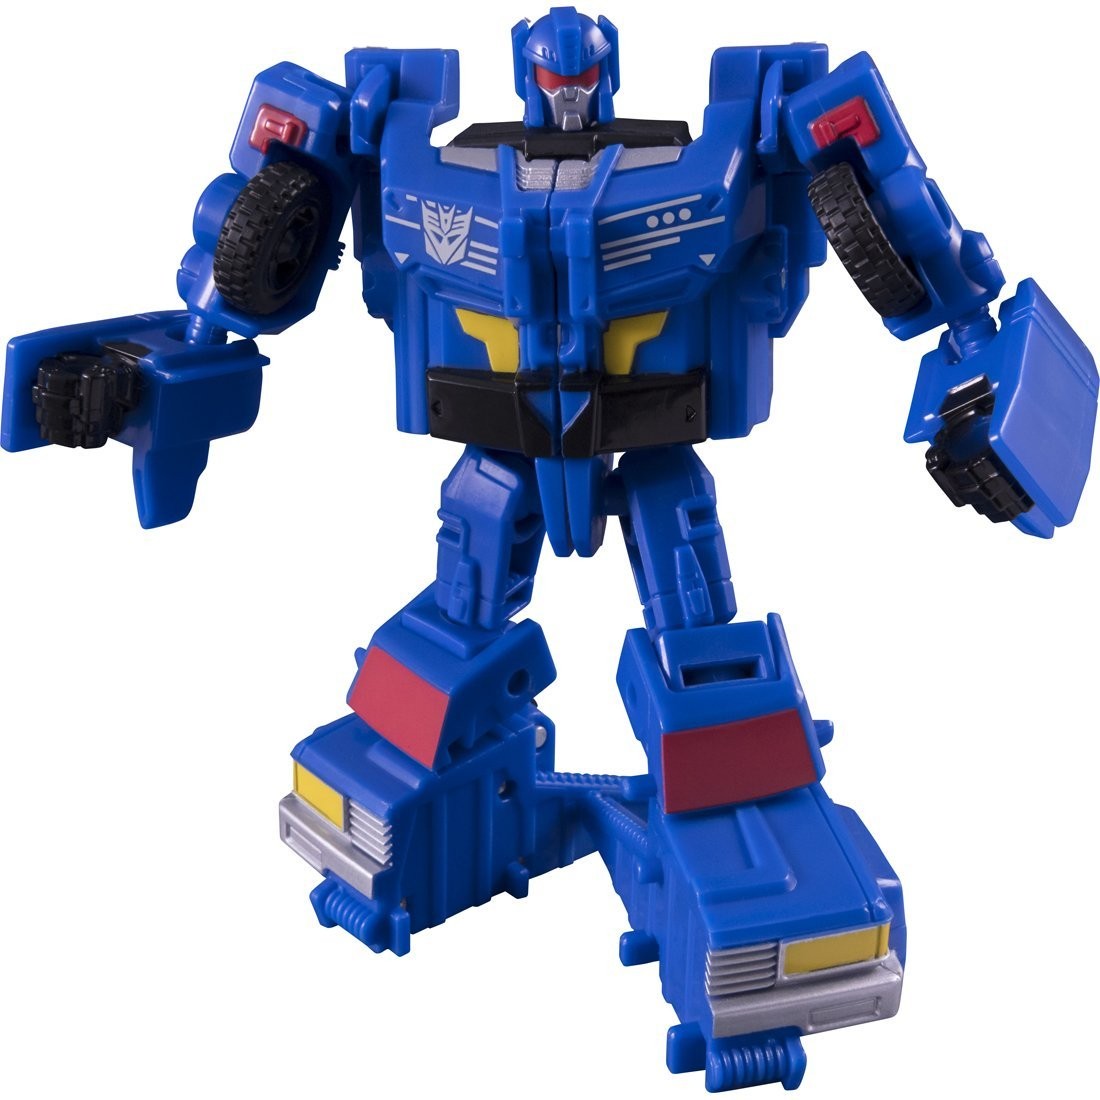 Transformers News: New Images - Takara Power of the Primes Octopunch, Battletrap, Predaking